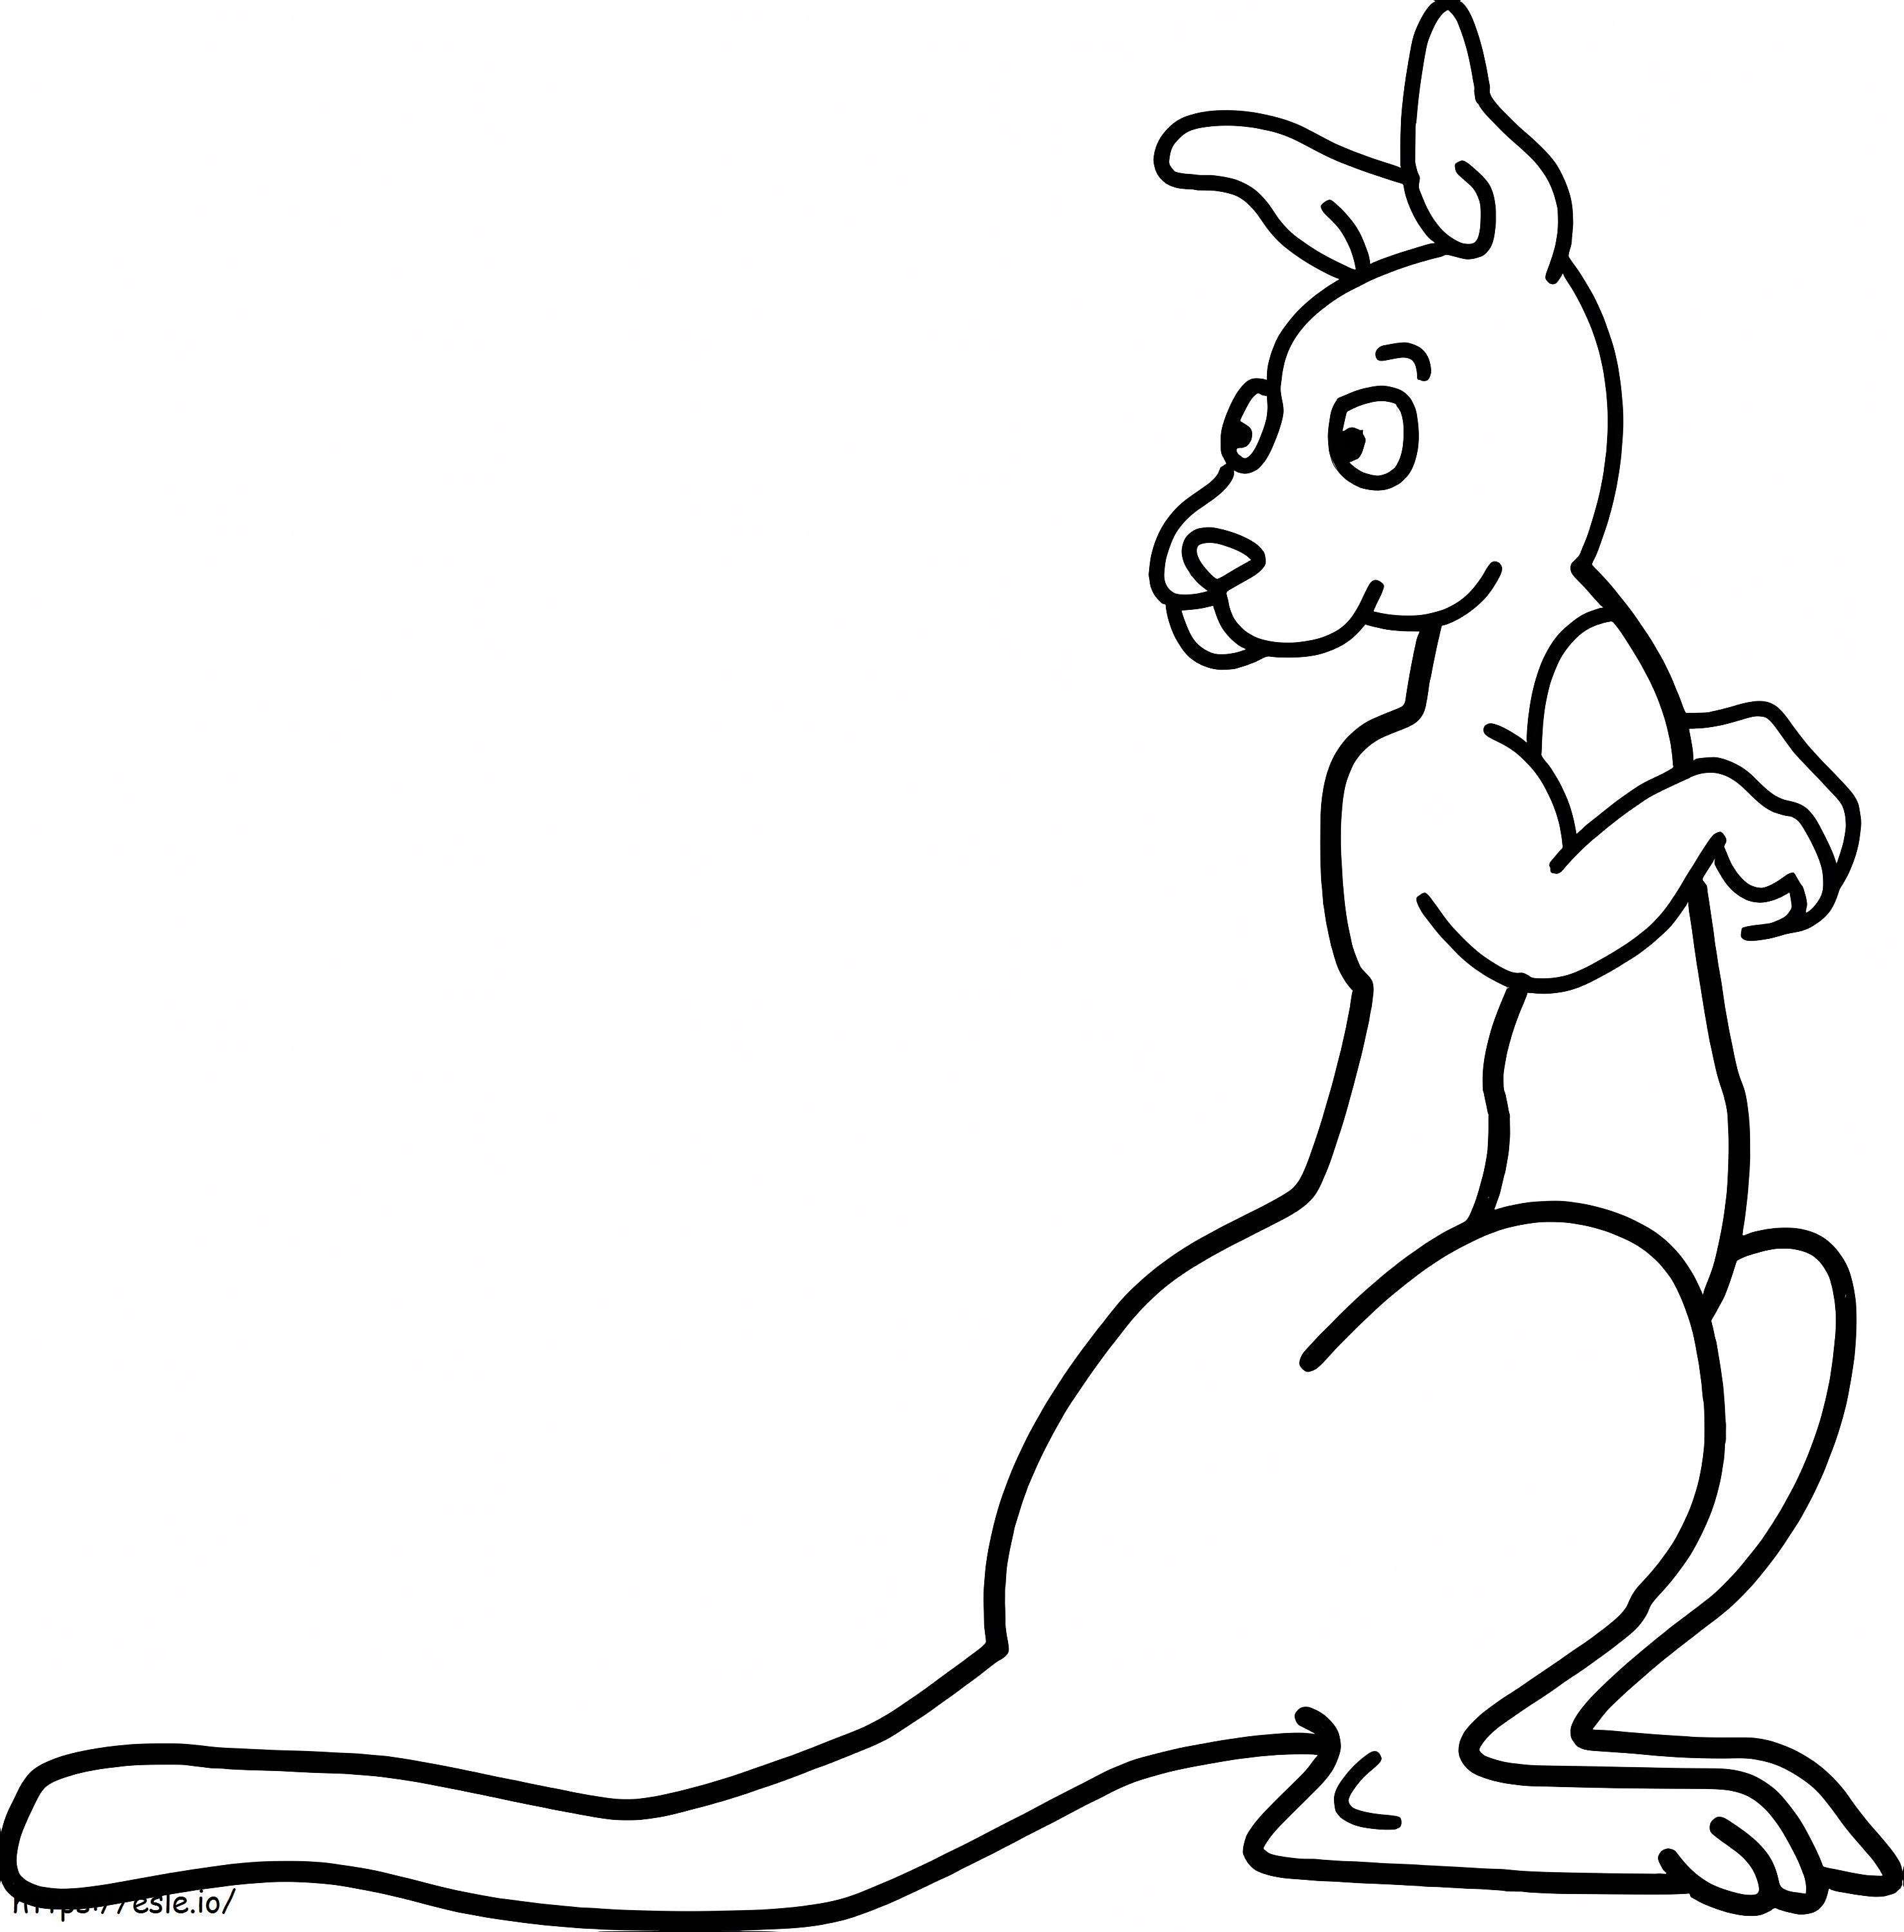 Normal Kangaroo coloring page